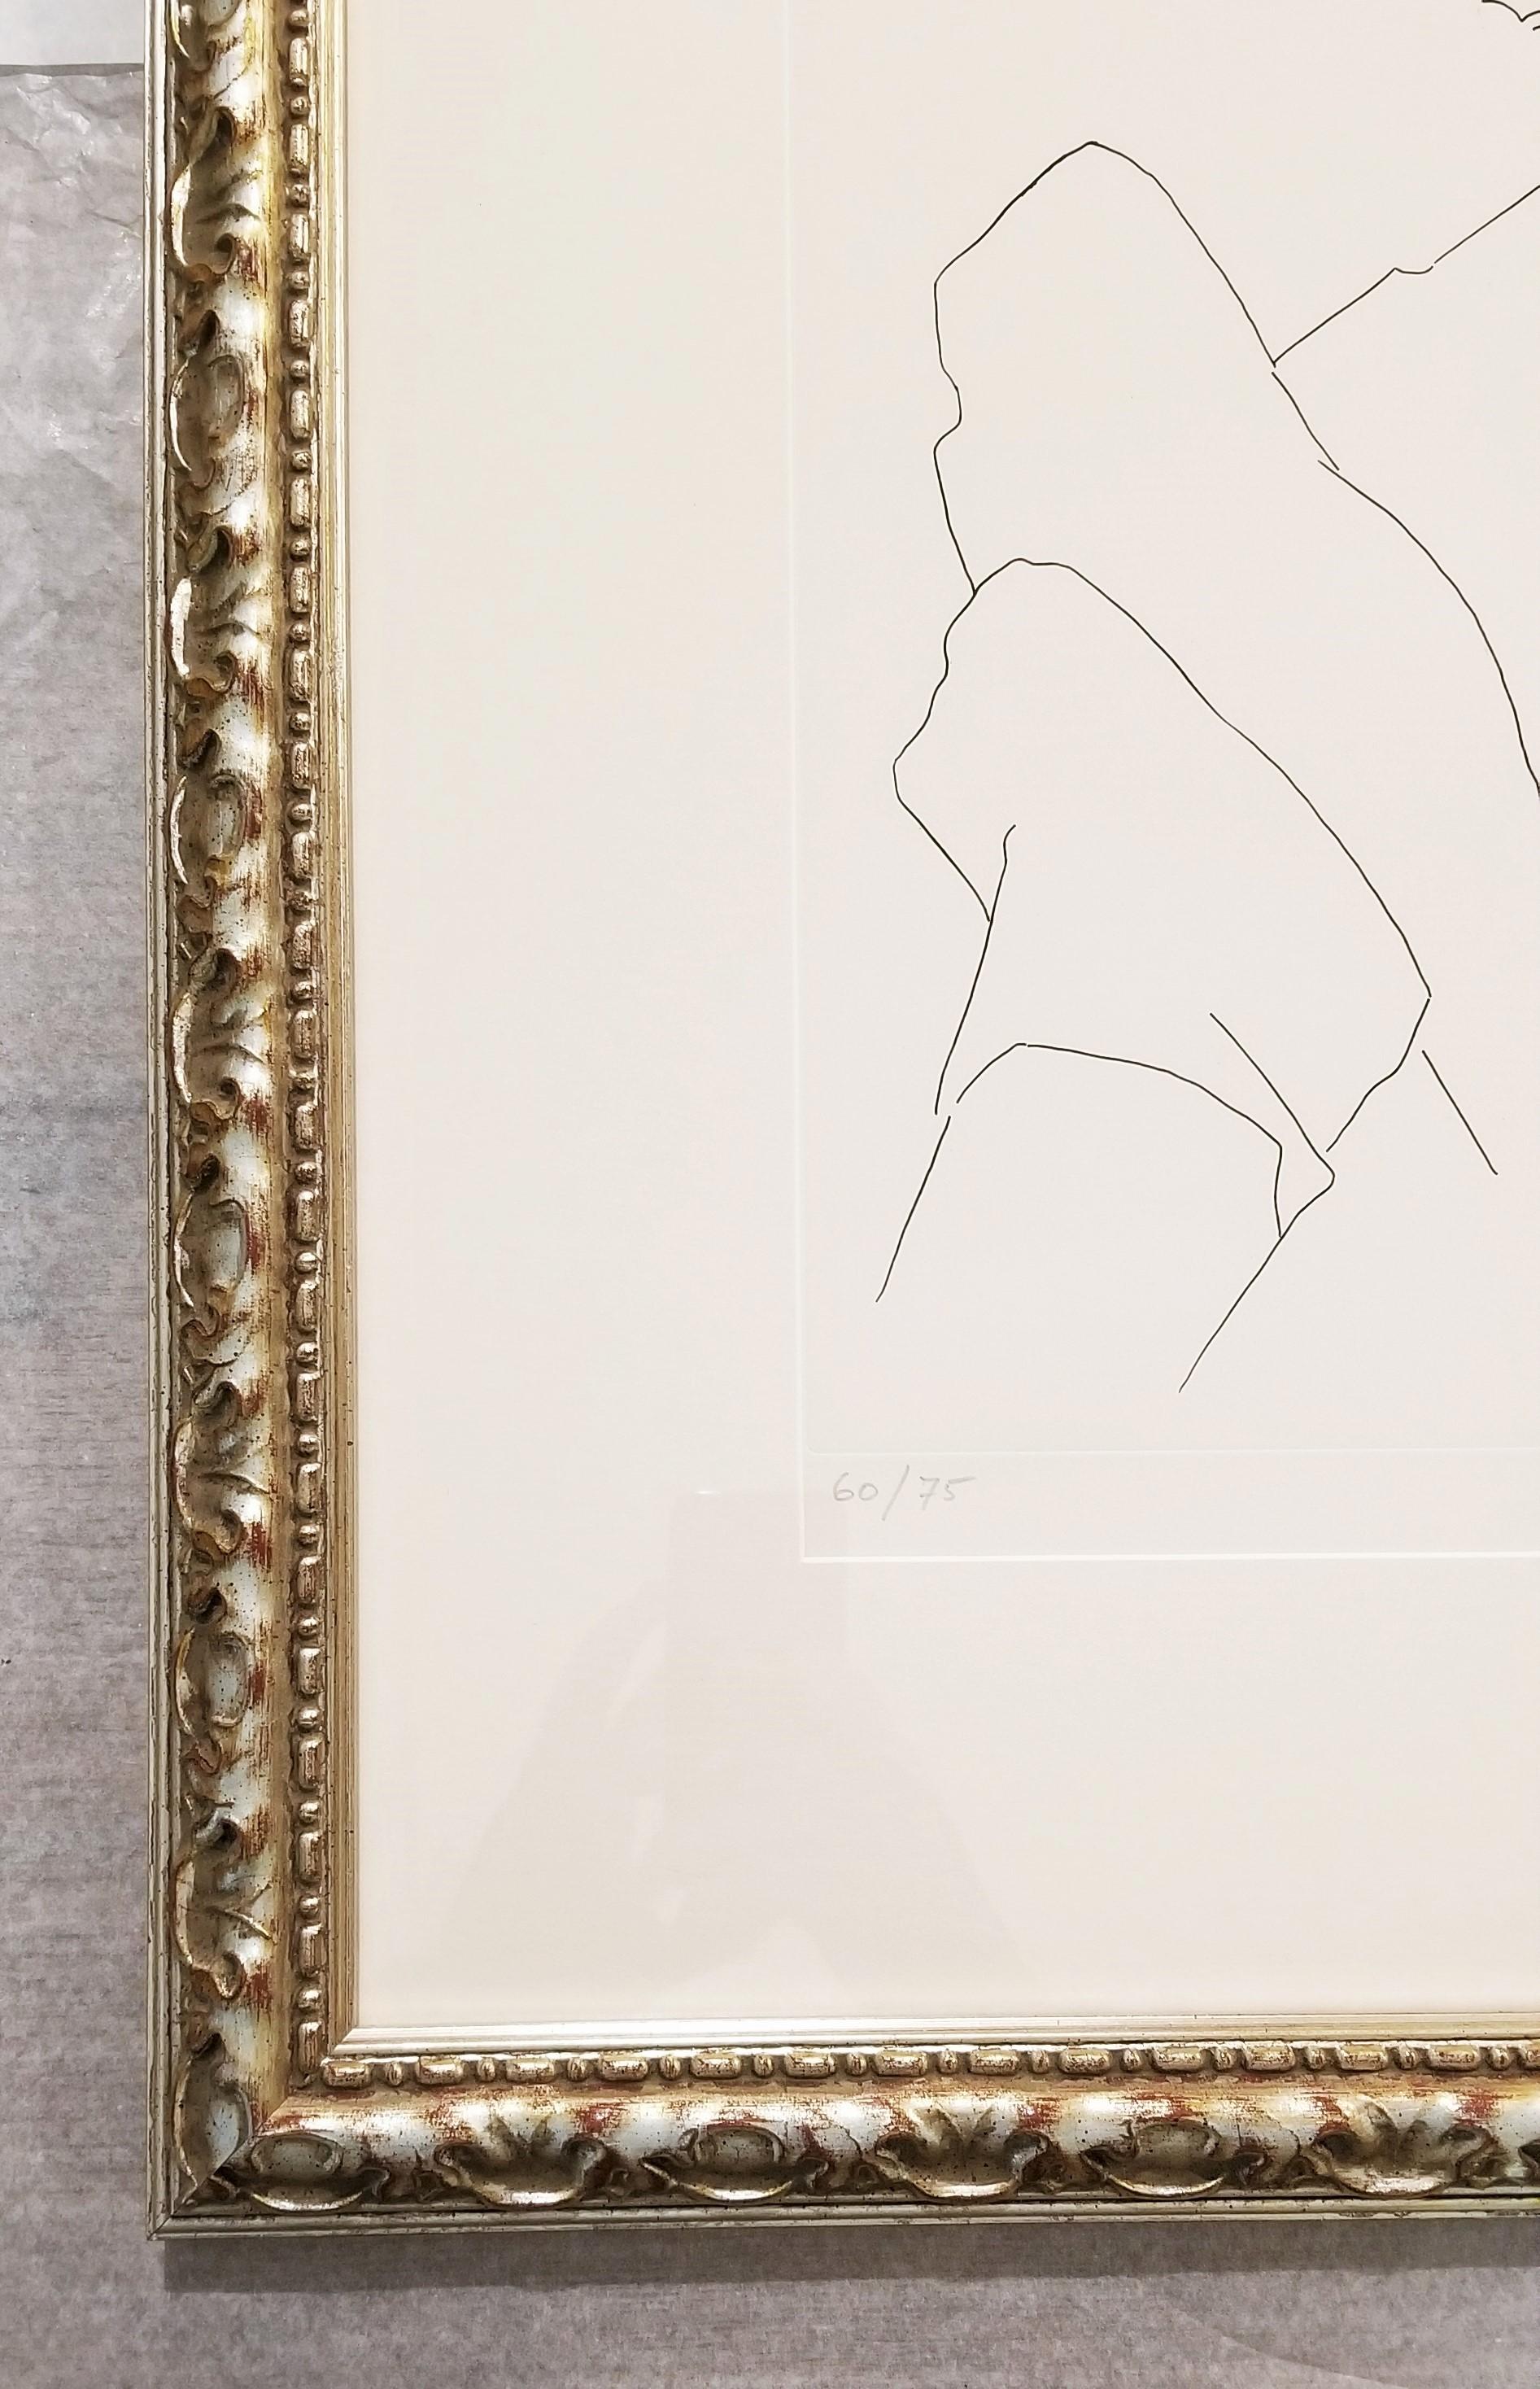 Artistics : Man Ray (américain, 1890-1976)
Titre : 